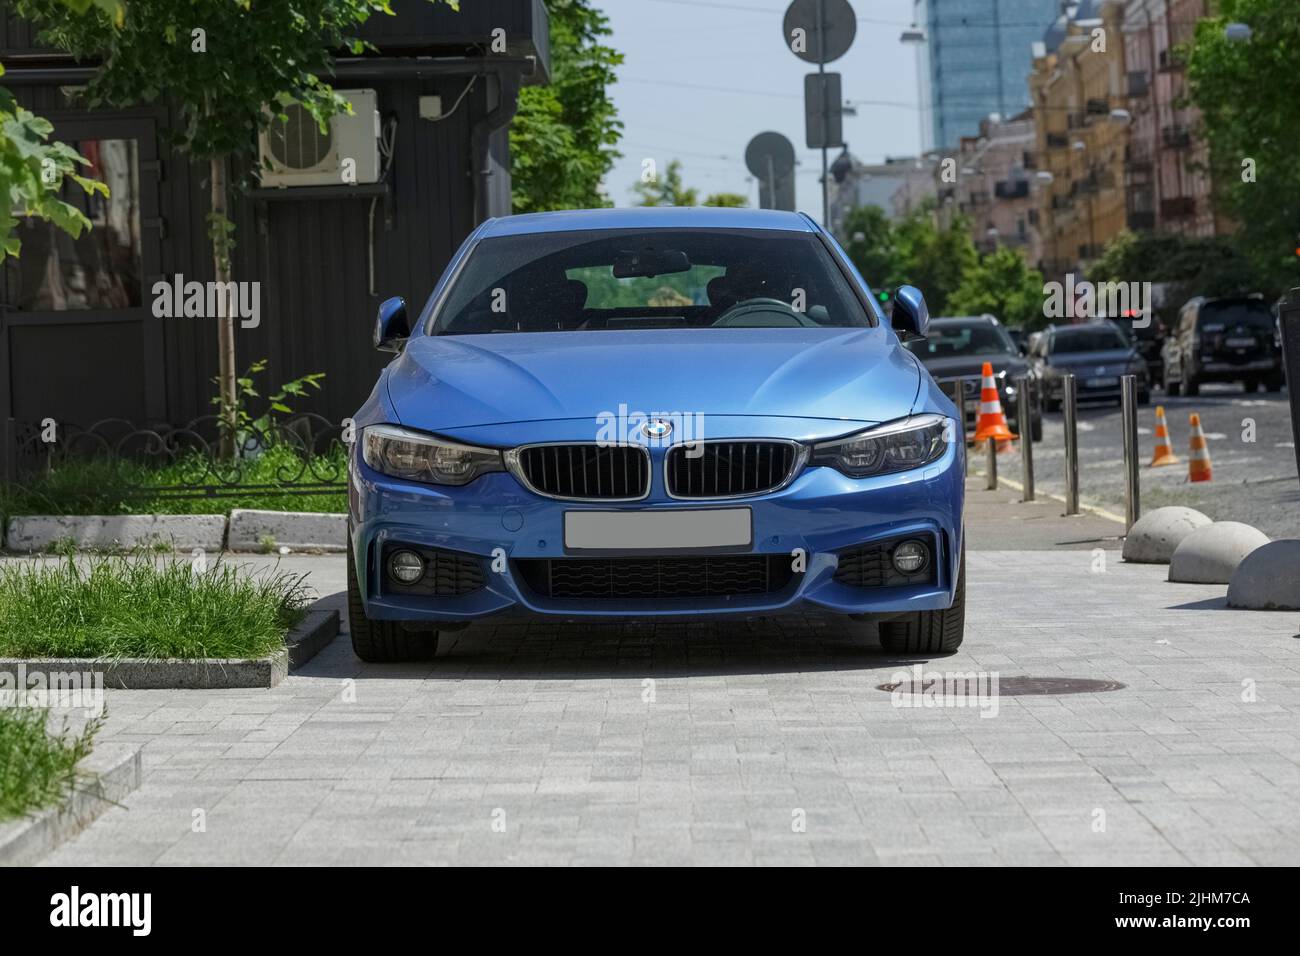 09.06.2020, Kyiv, Ukraine, BMW car on city street, close-up Stock Photo